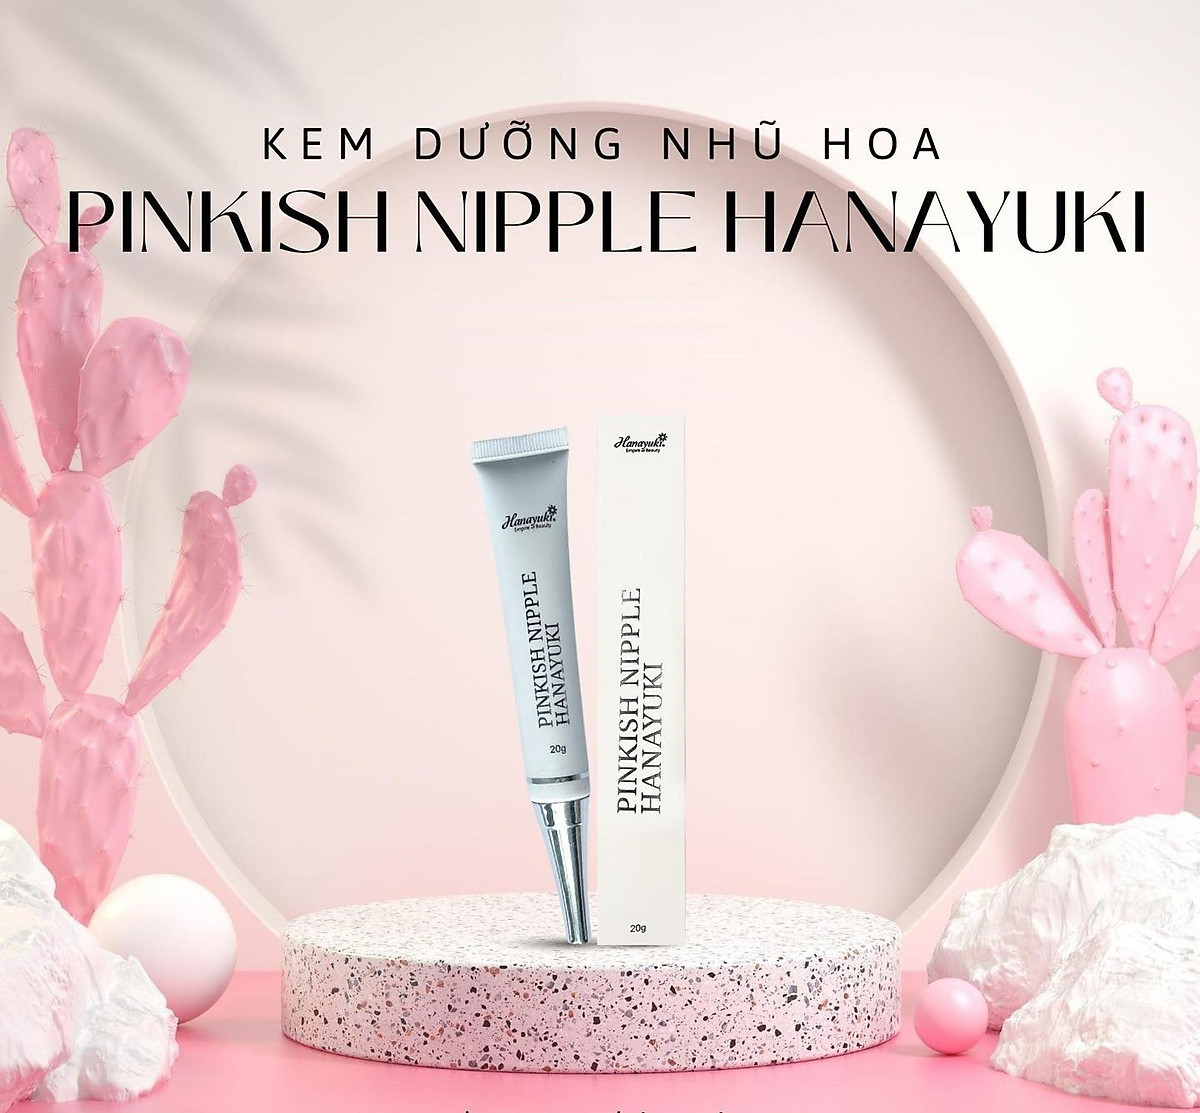 Kem Dưỡng Nhũ Hoa Hanayuki Pinkish Nipple